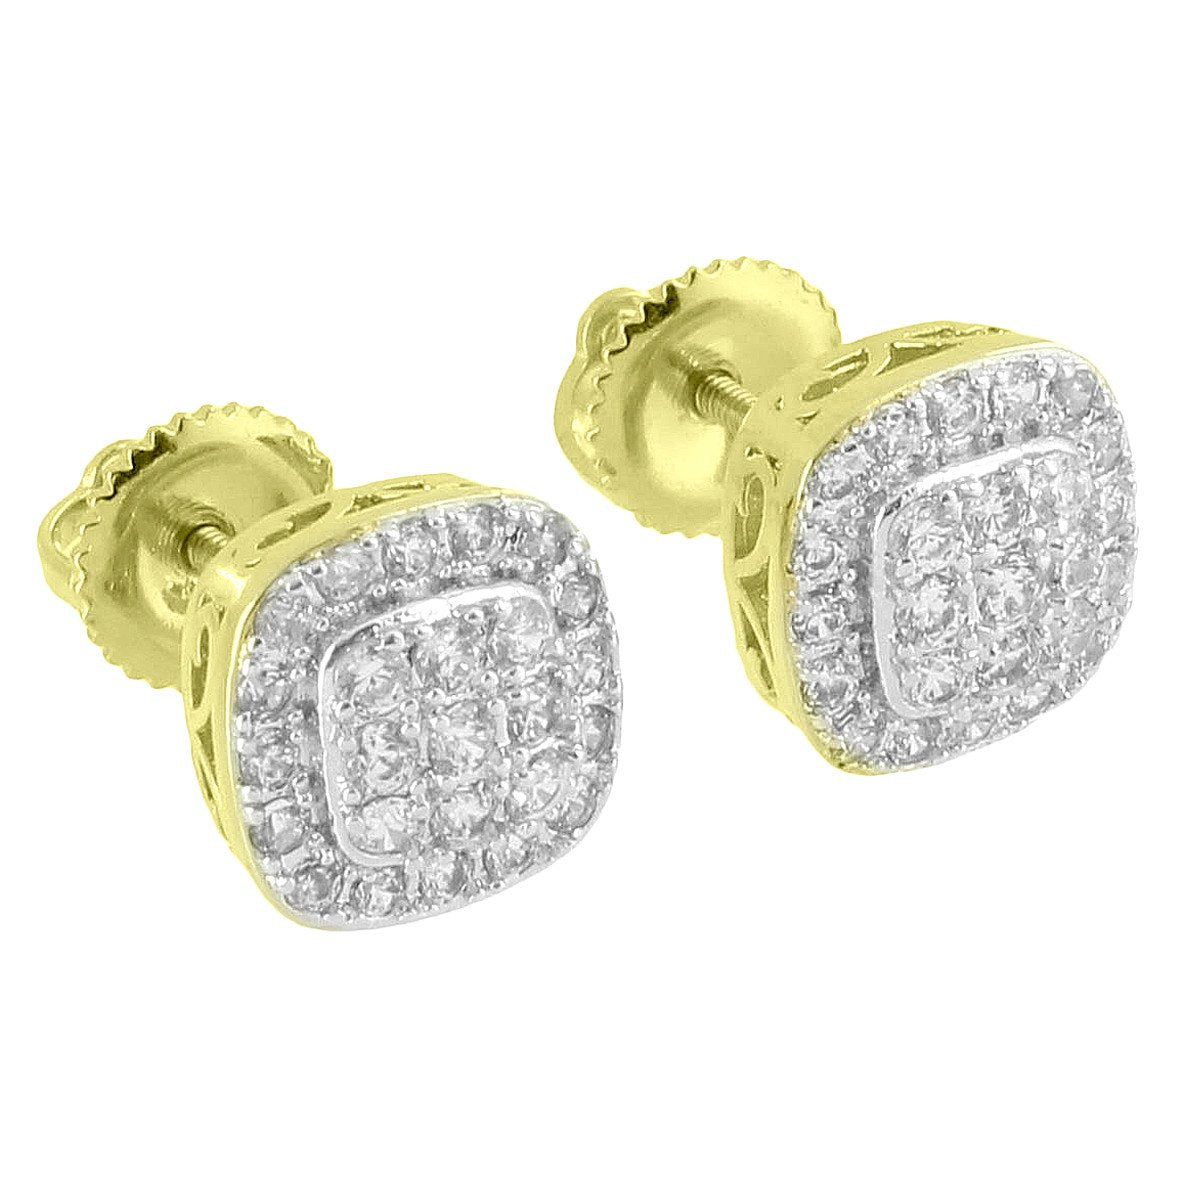 Bling Custom Earrings Simulated Diamonds 14k Yellow Gold Finish Screw Back Studs